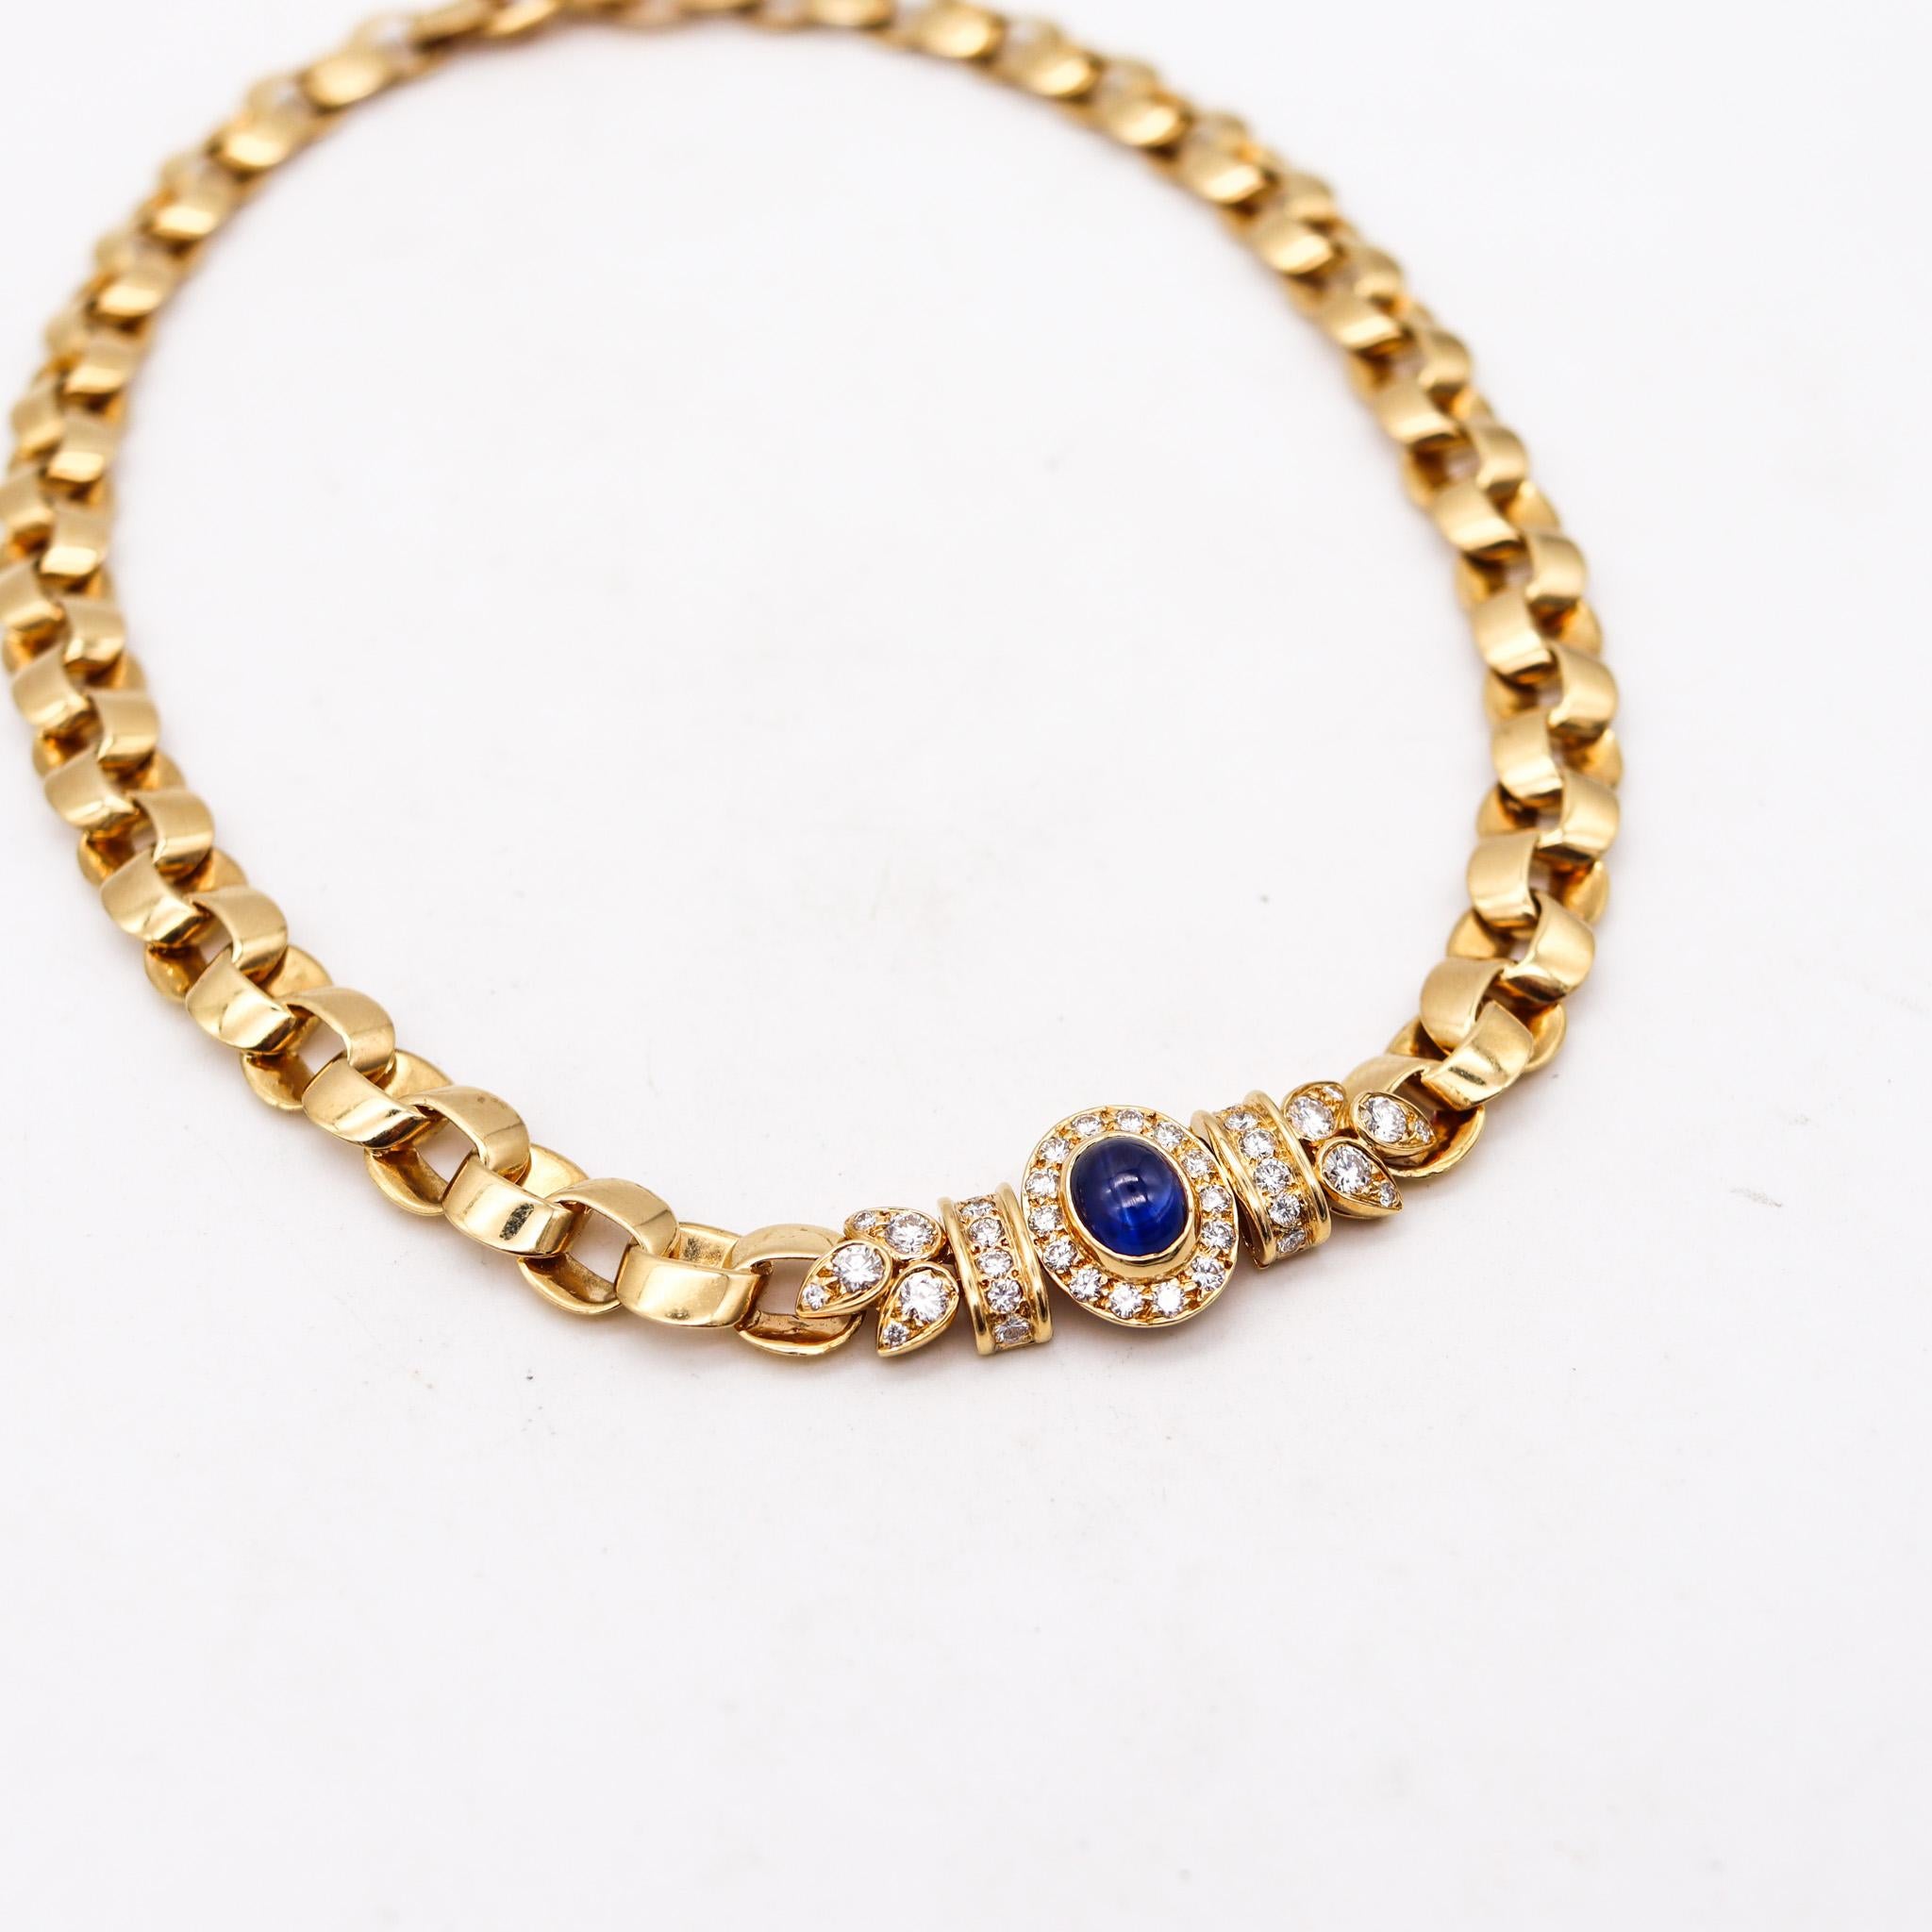 Modernist Van Cleef & Arpels Paris Necklace In 18Kt Gold With 3.63 Ctw Diamonds & Sapphire For Sale